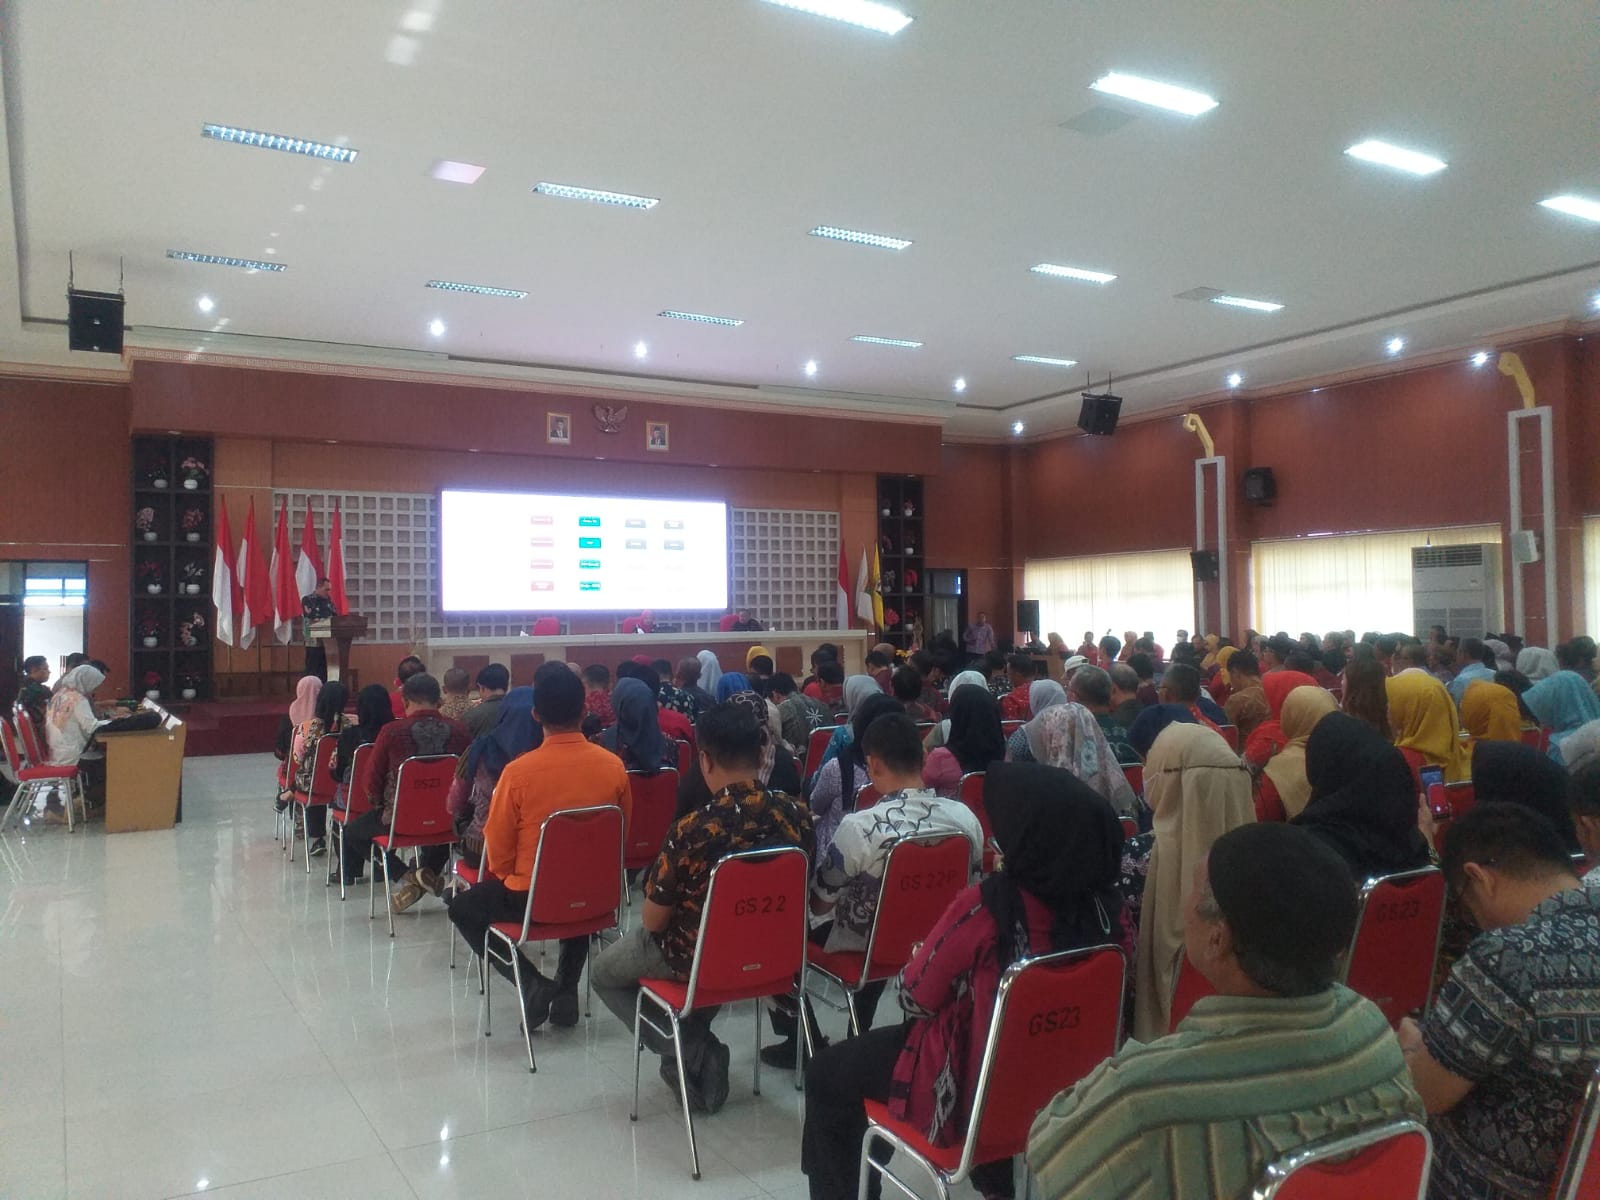 Musrenbang Bandar Lampung, Wali Kota Minta OPD Jangan Mudah Berpuas Diri dan Terus Tingkatkan Kinerja